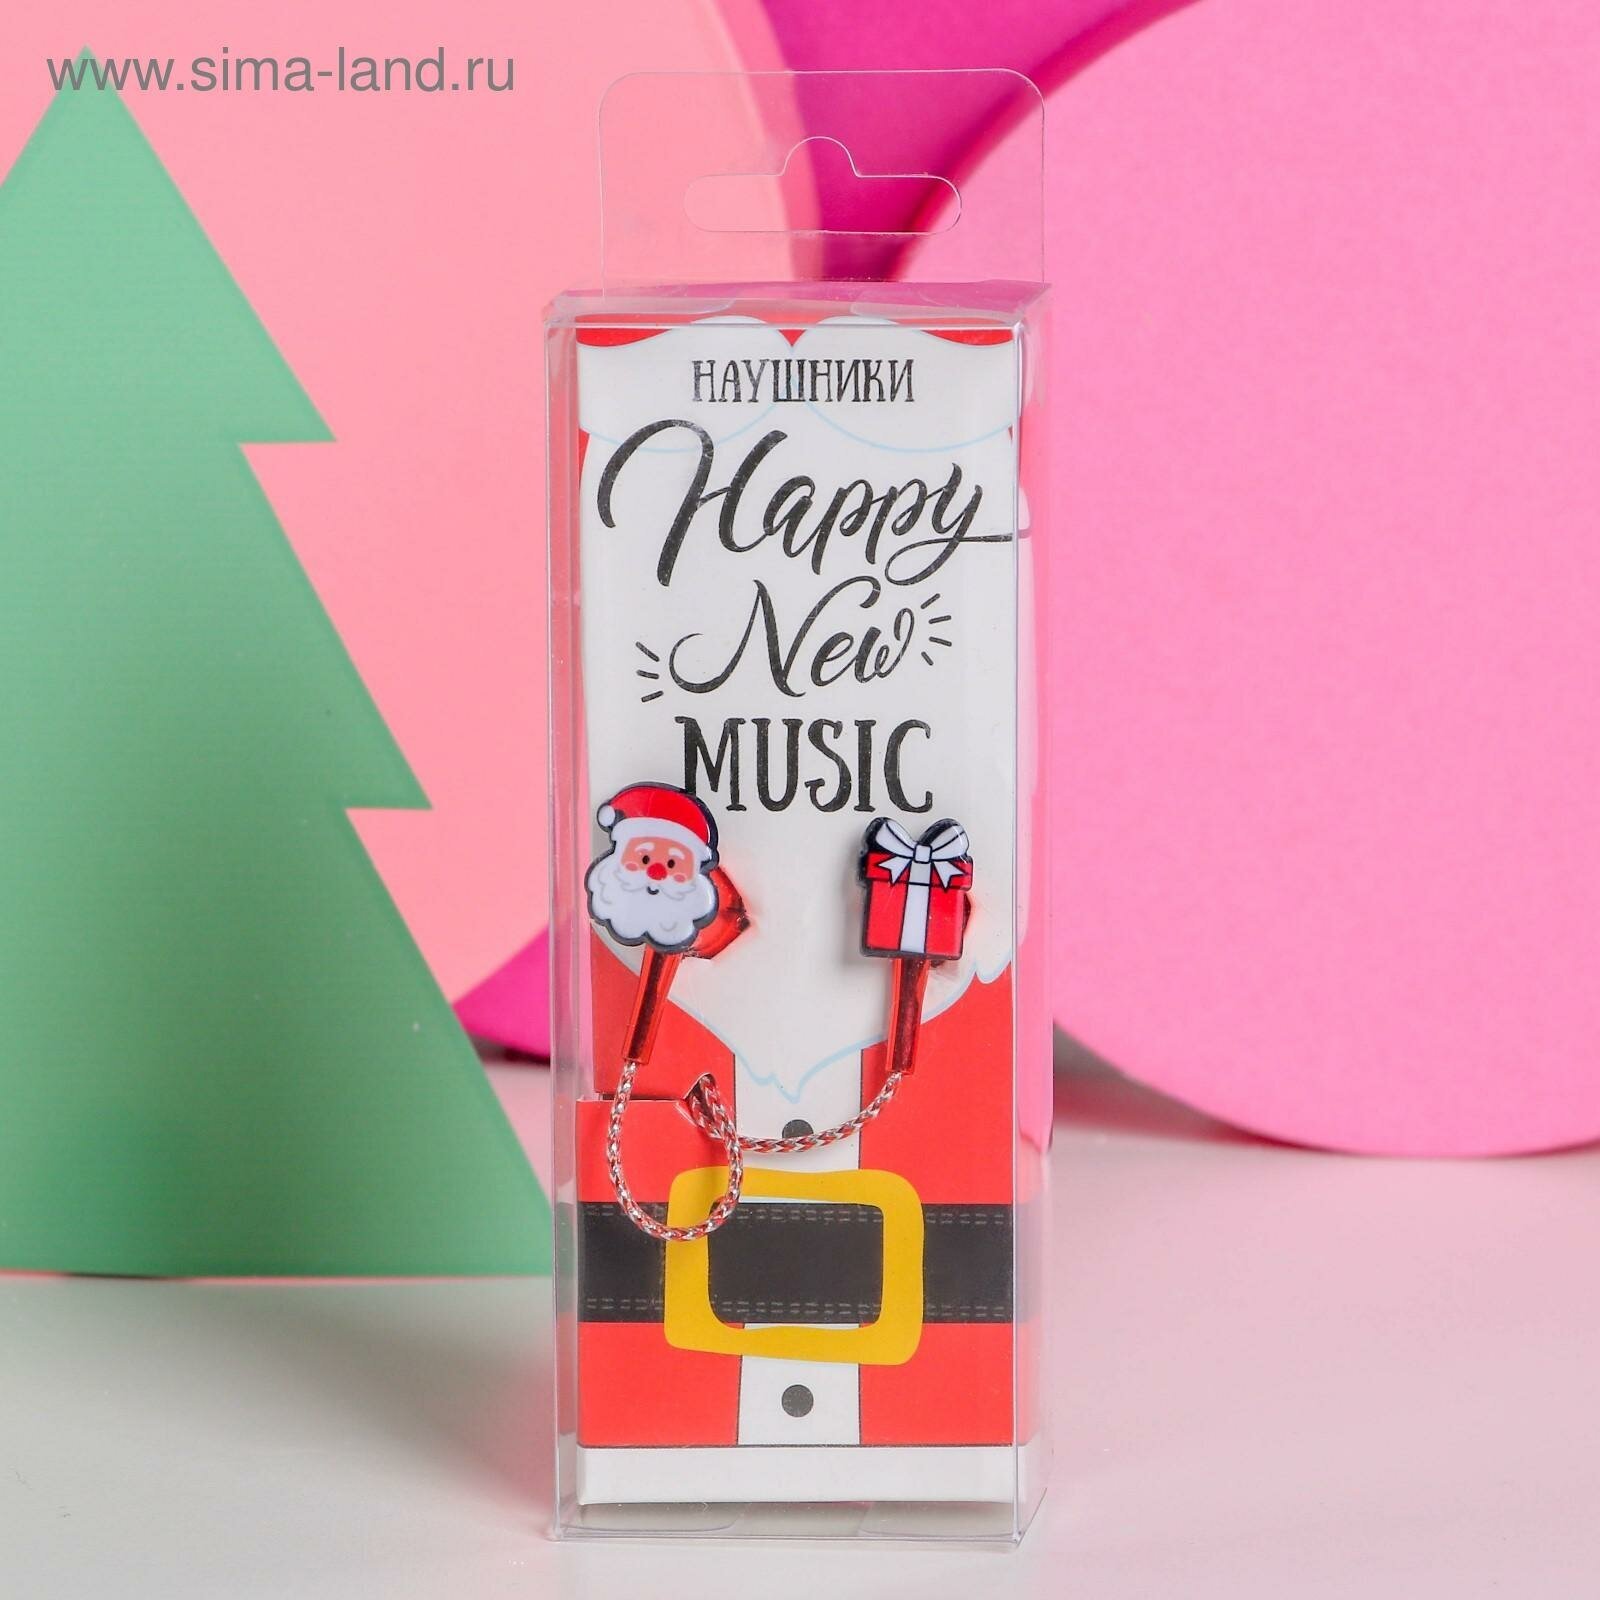 Проводные наушники «Happy new music», 1,2 м (1шт.)